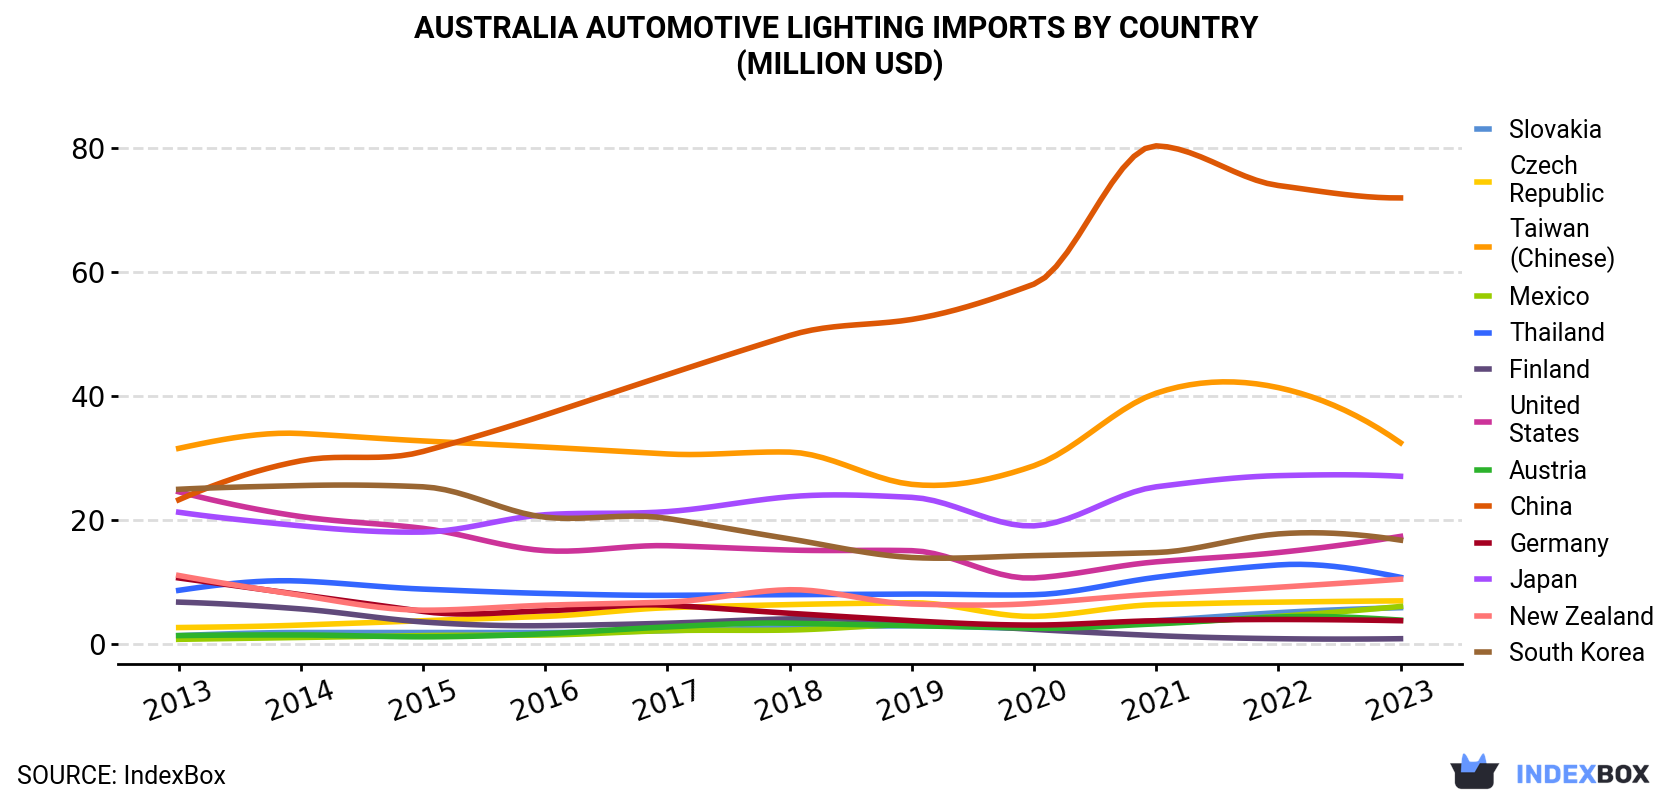 Australia Automotive Lighting Imports By Country (Million USD)